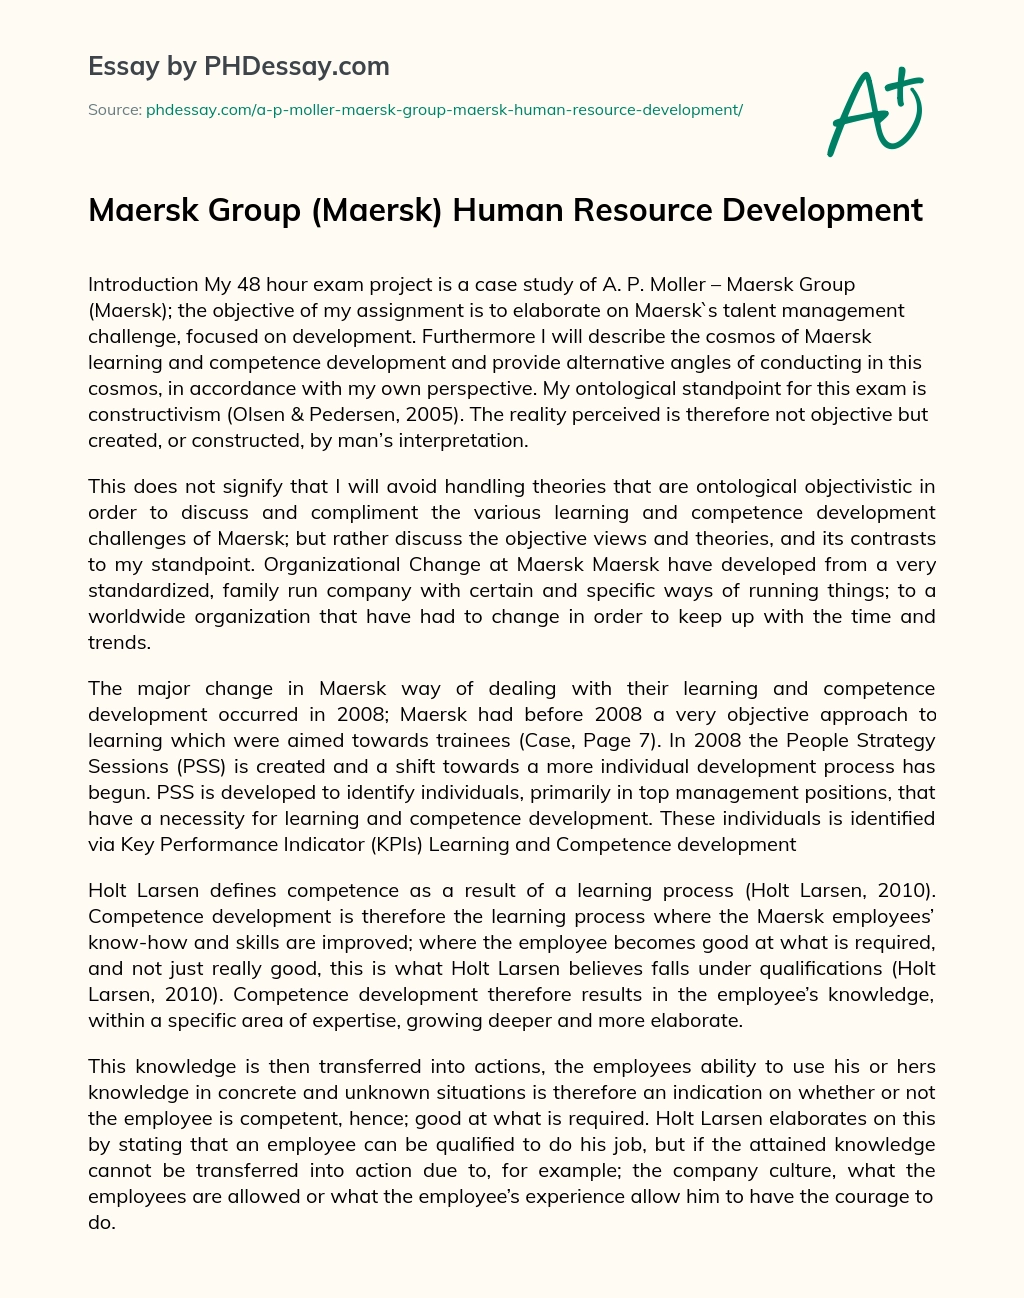 Maersk Group (Maersk) Human Resource Development essay